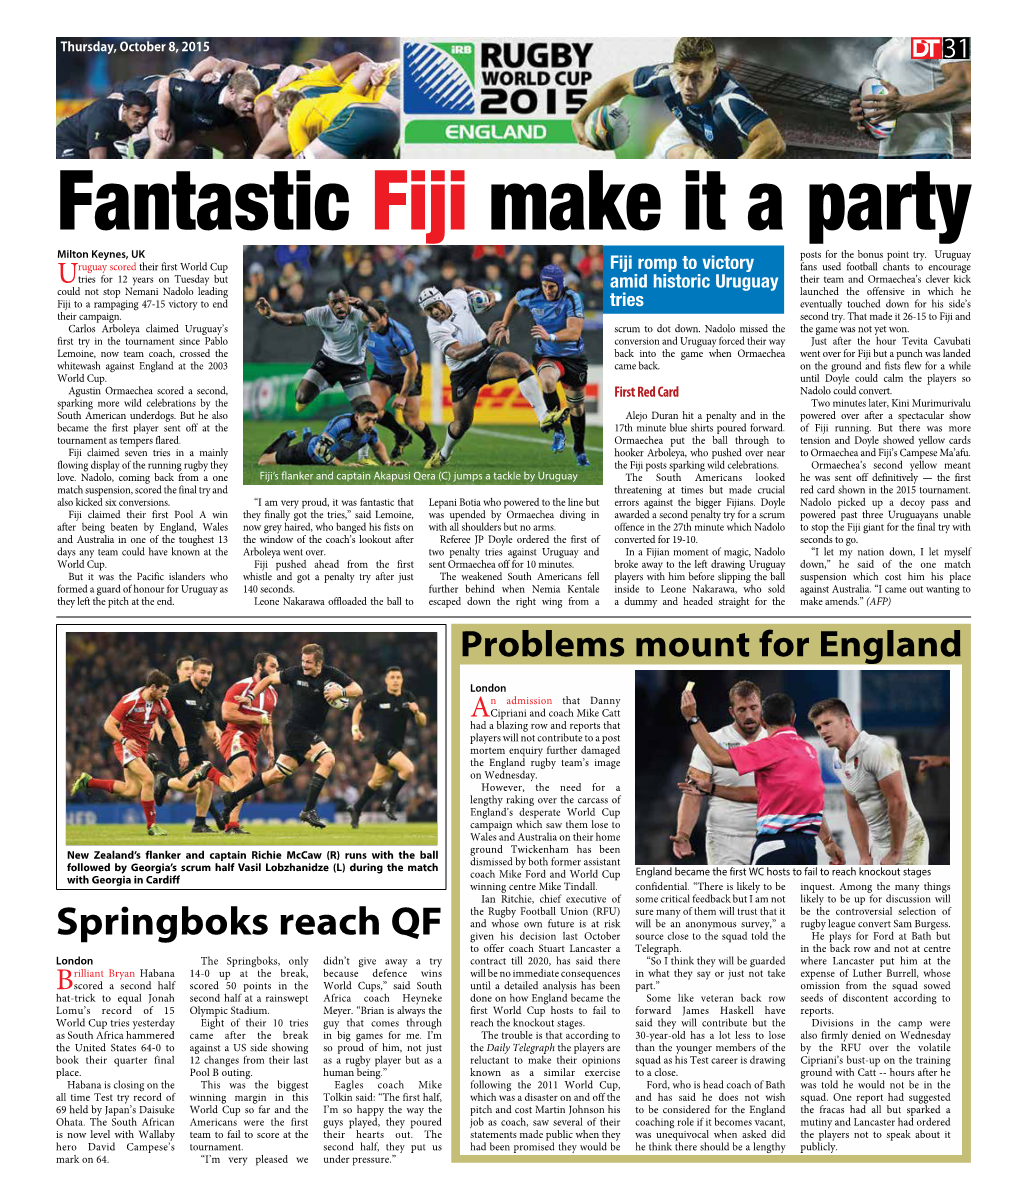 Fantastic Fiji Make It a Party Milton Keynes, UK Posts for the Bonus Point Try